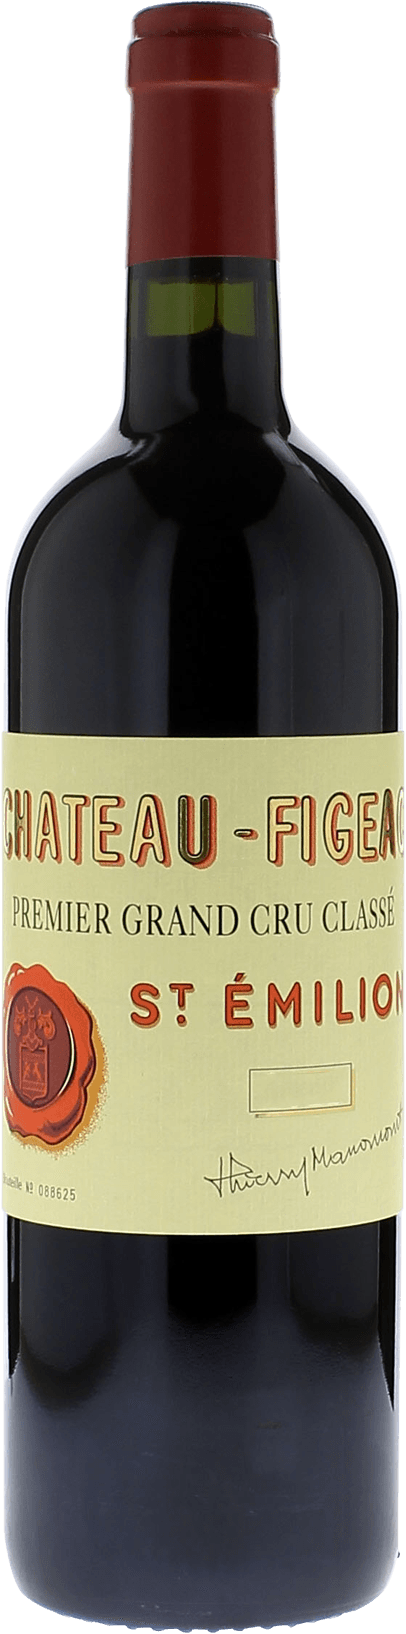 Figeac 1999 1er Grand cru B class Saint-Emilion, Bordeaux rouge